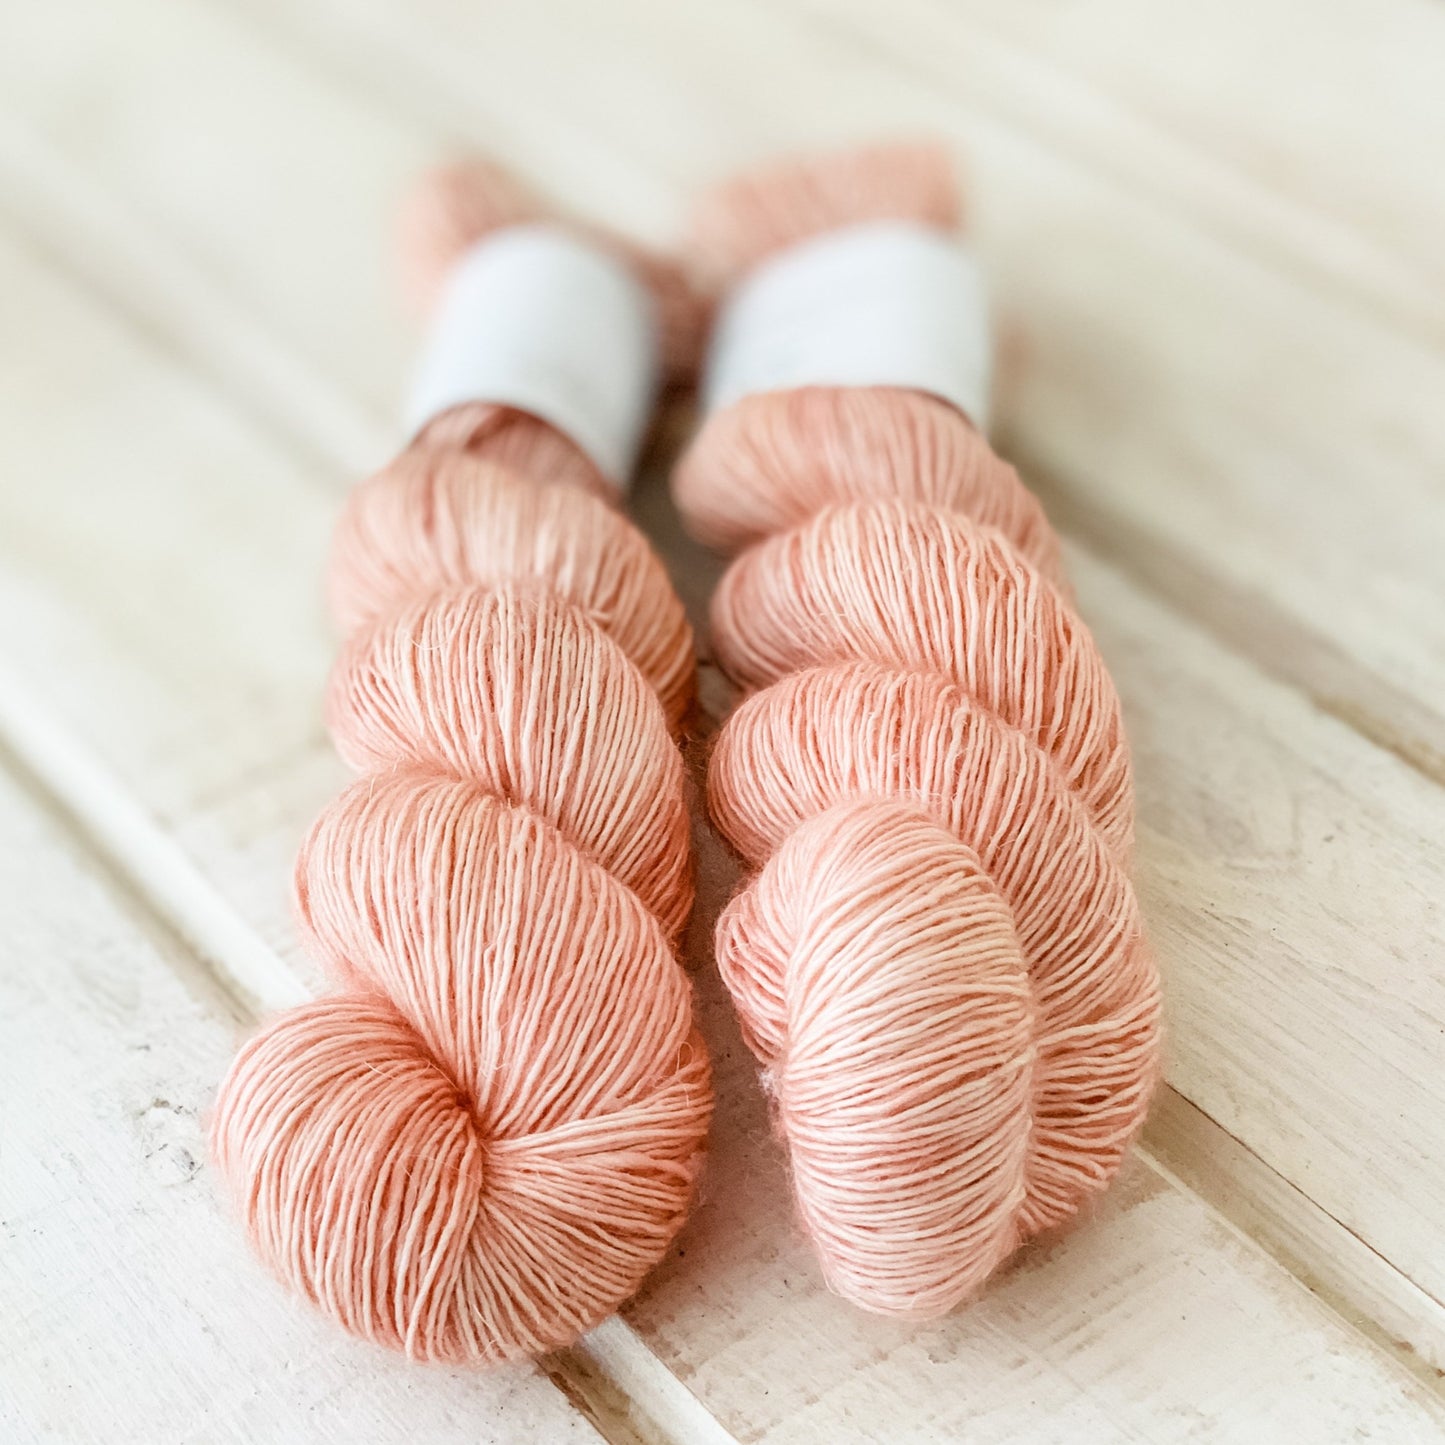 Canyon - Lysefjord Single - Tonal Yarn - Hand dyed yarn